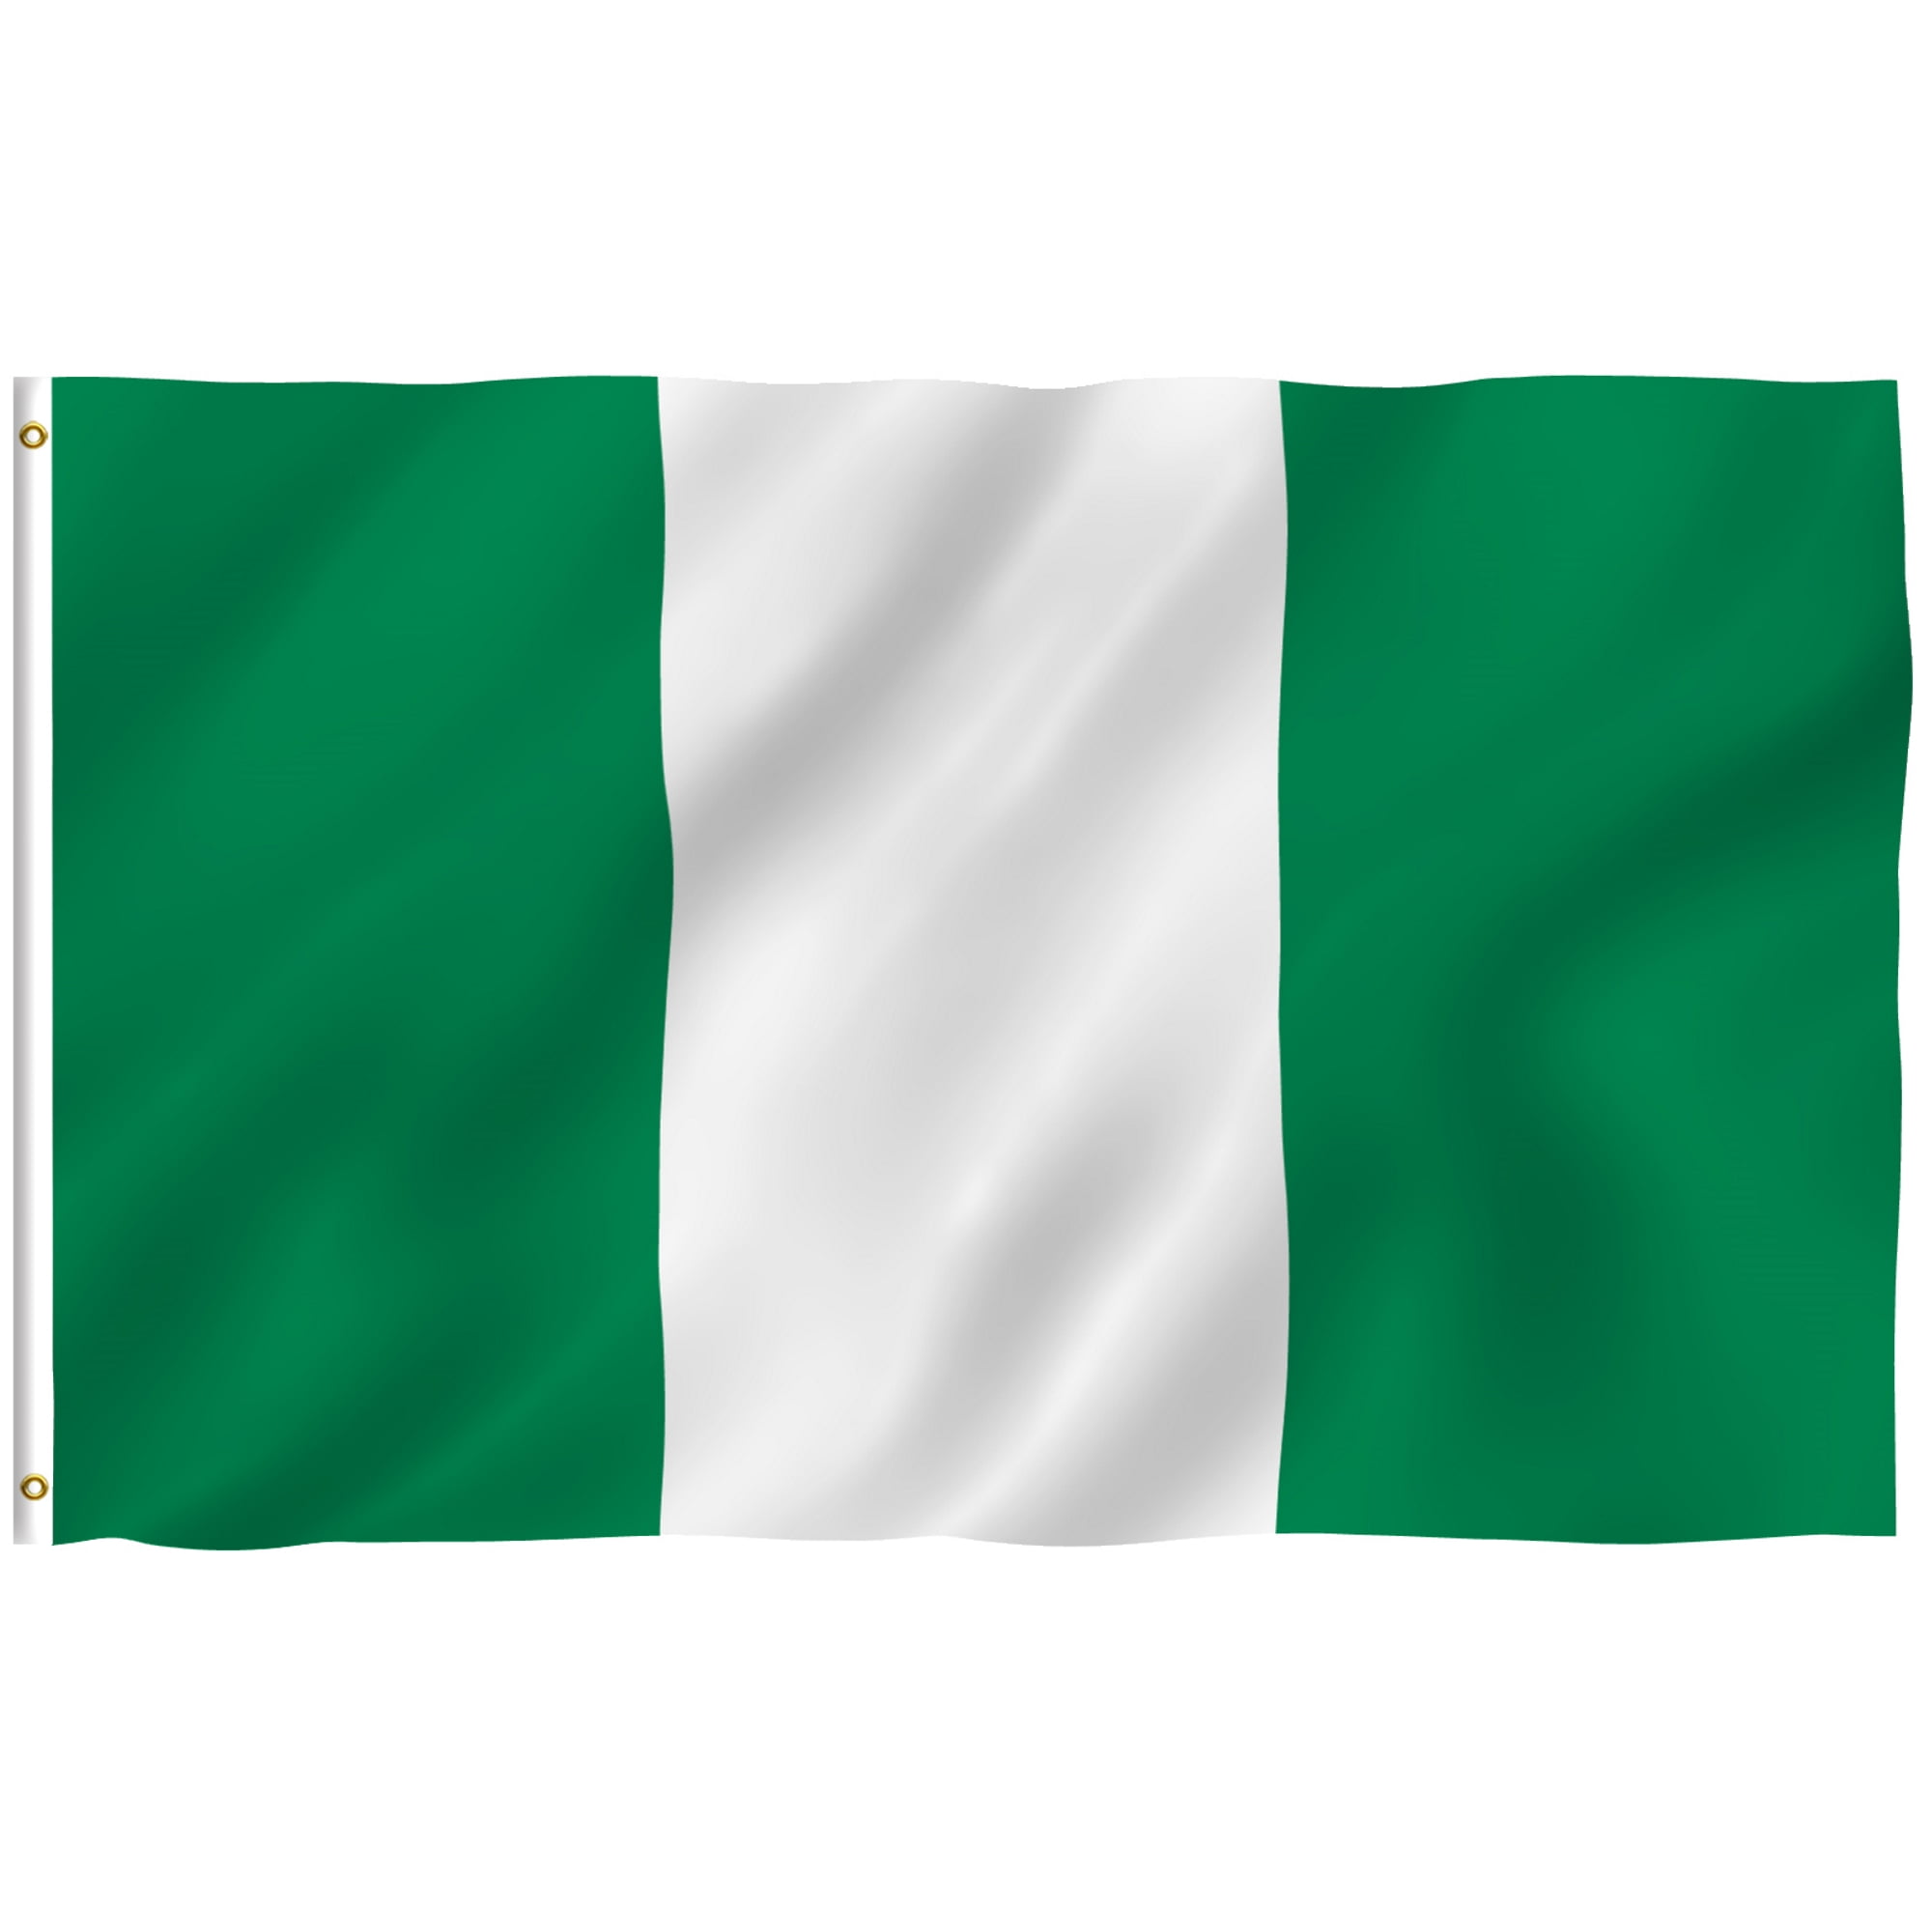 NEW 5 x 3 FT LARGE NIGERIA FLAG